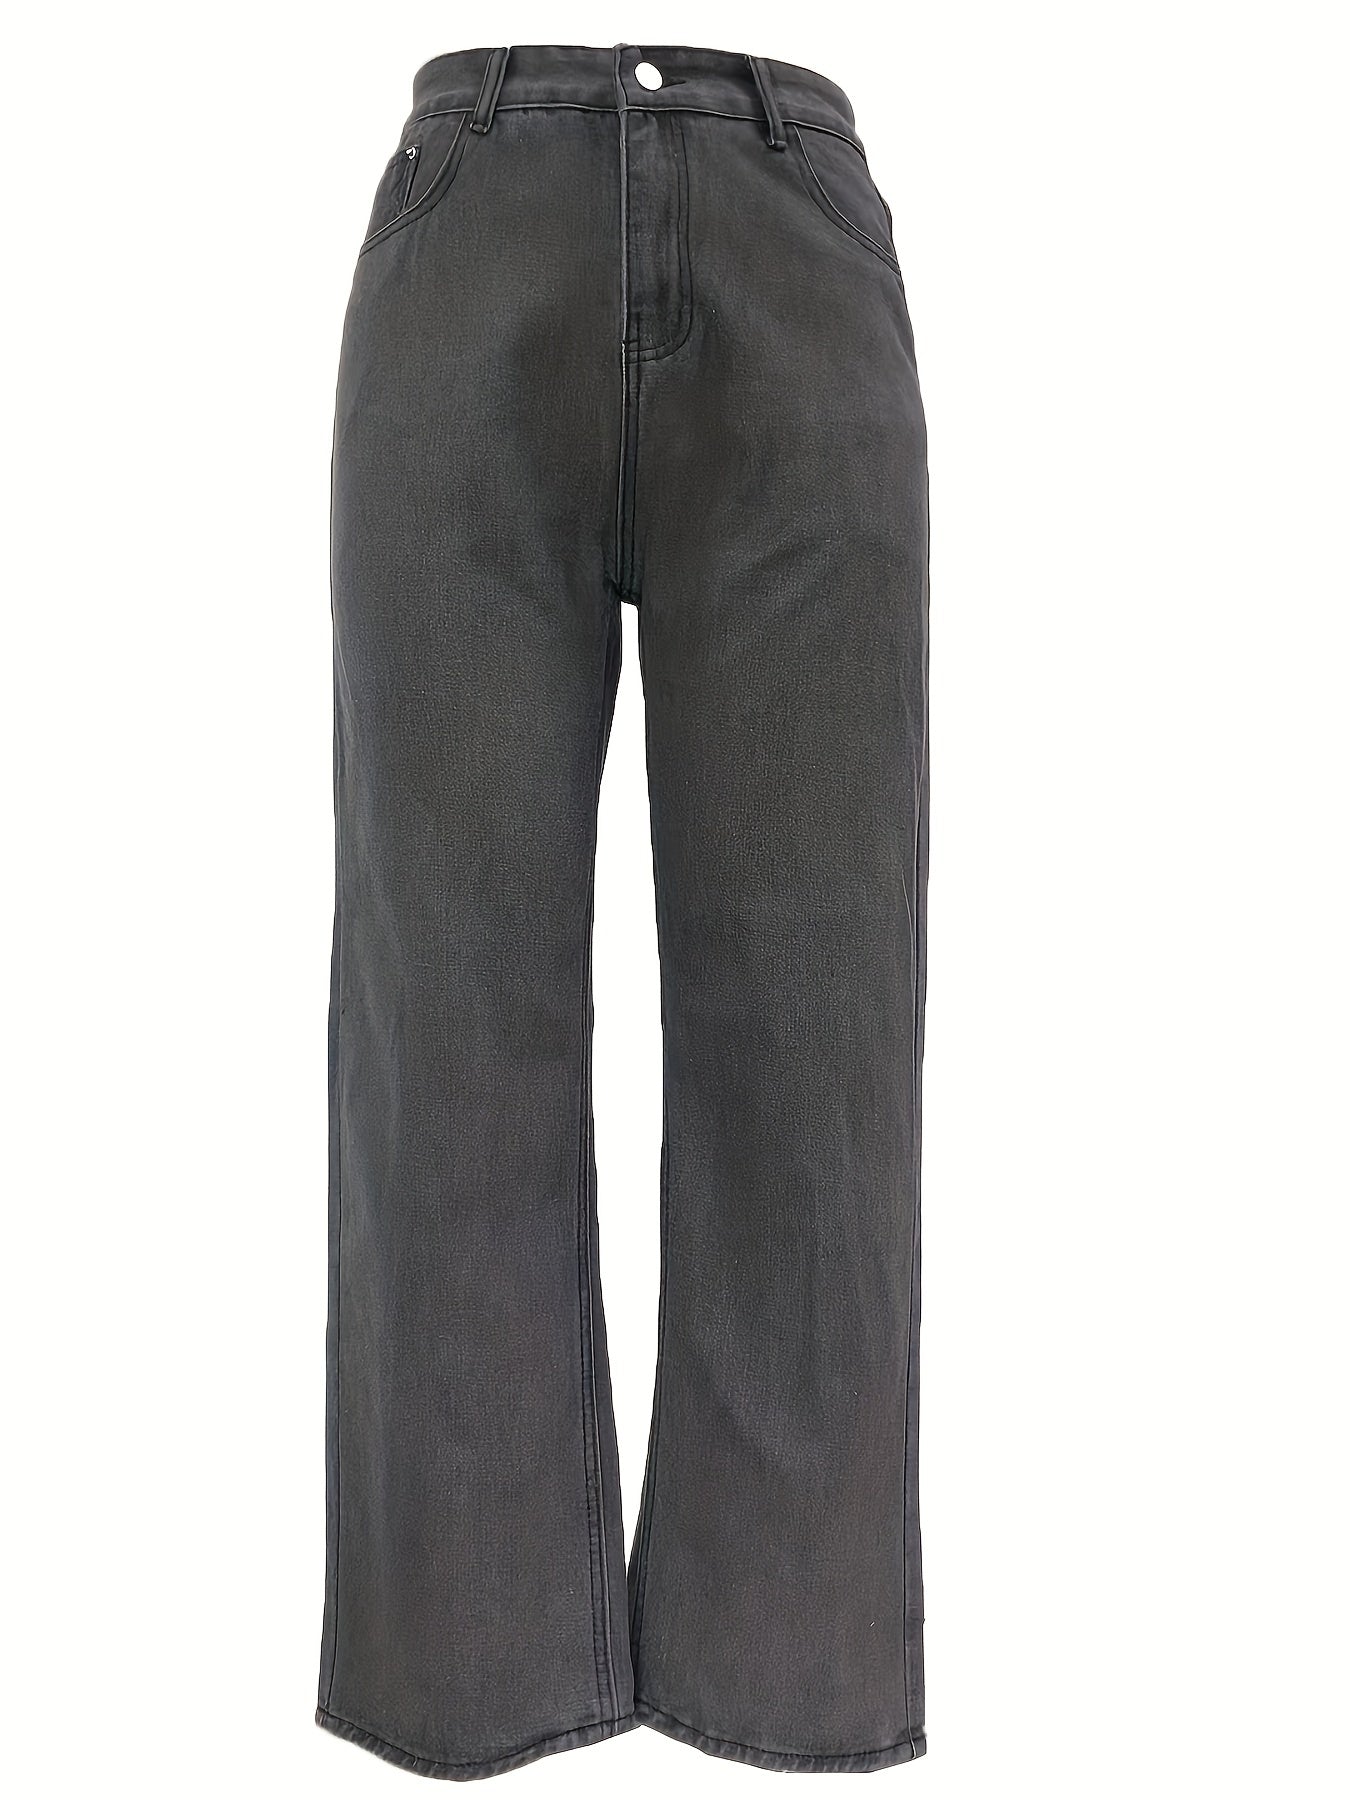 「lovevop」Solid Loose Fit Straight Jeans, Non-Stretch Slash Pockets Baggy Denim Pants, Women's Denim Jeans & Clothing